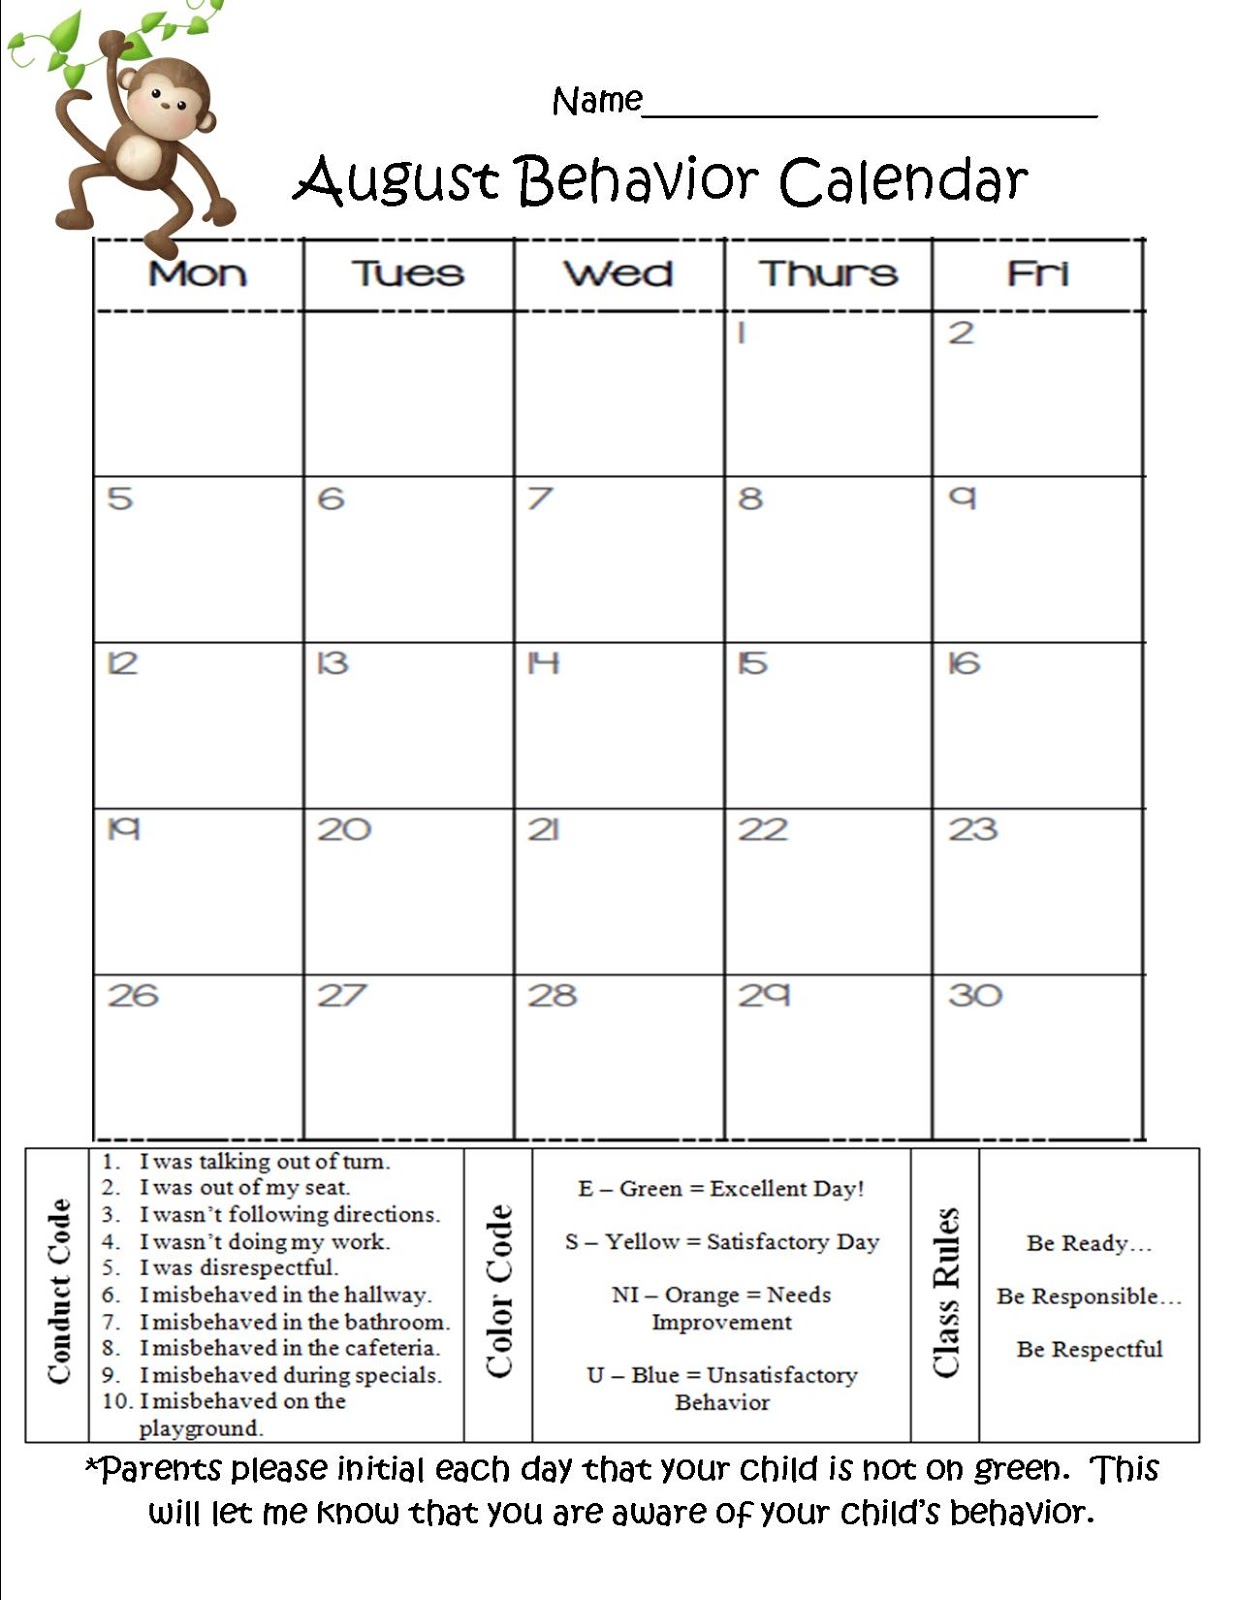 mrs-cook-s-2nd-grade-blog-monthly-behavior-calendar